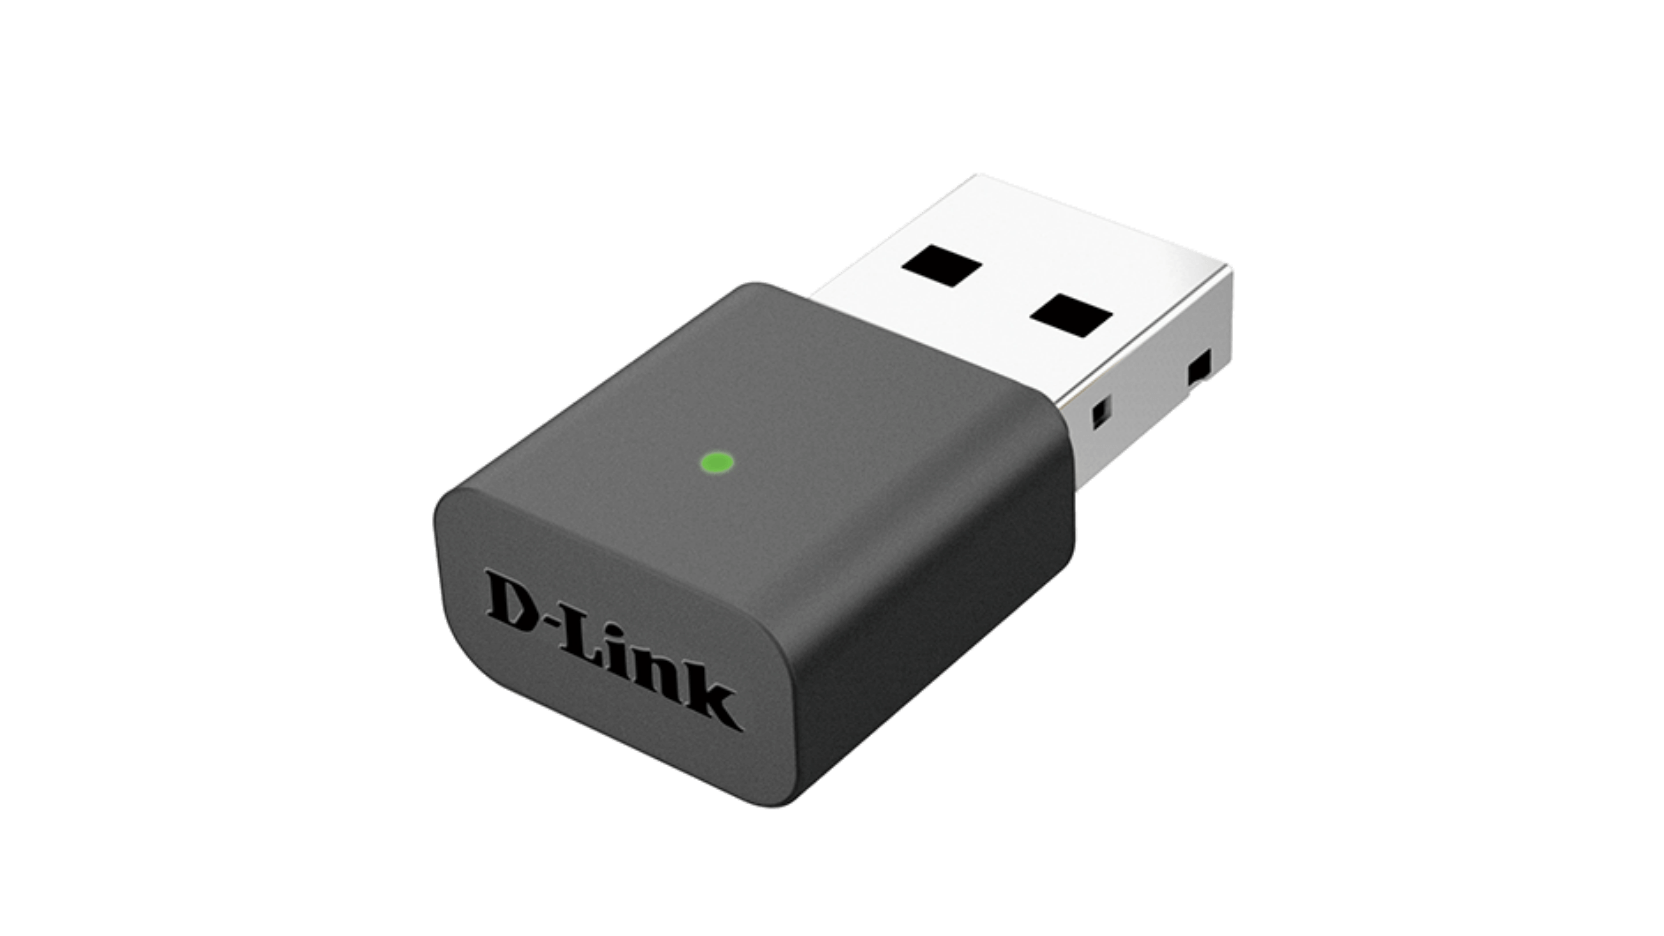 D-LINK USB WIRELESS N 300 NANO (DWA-131) ديلنك